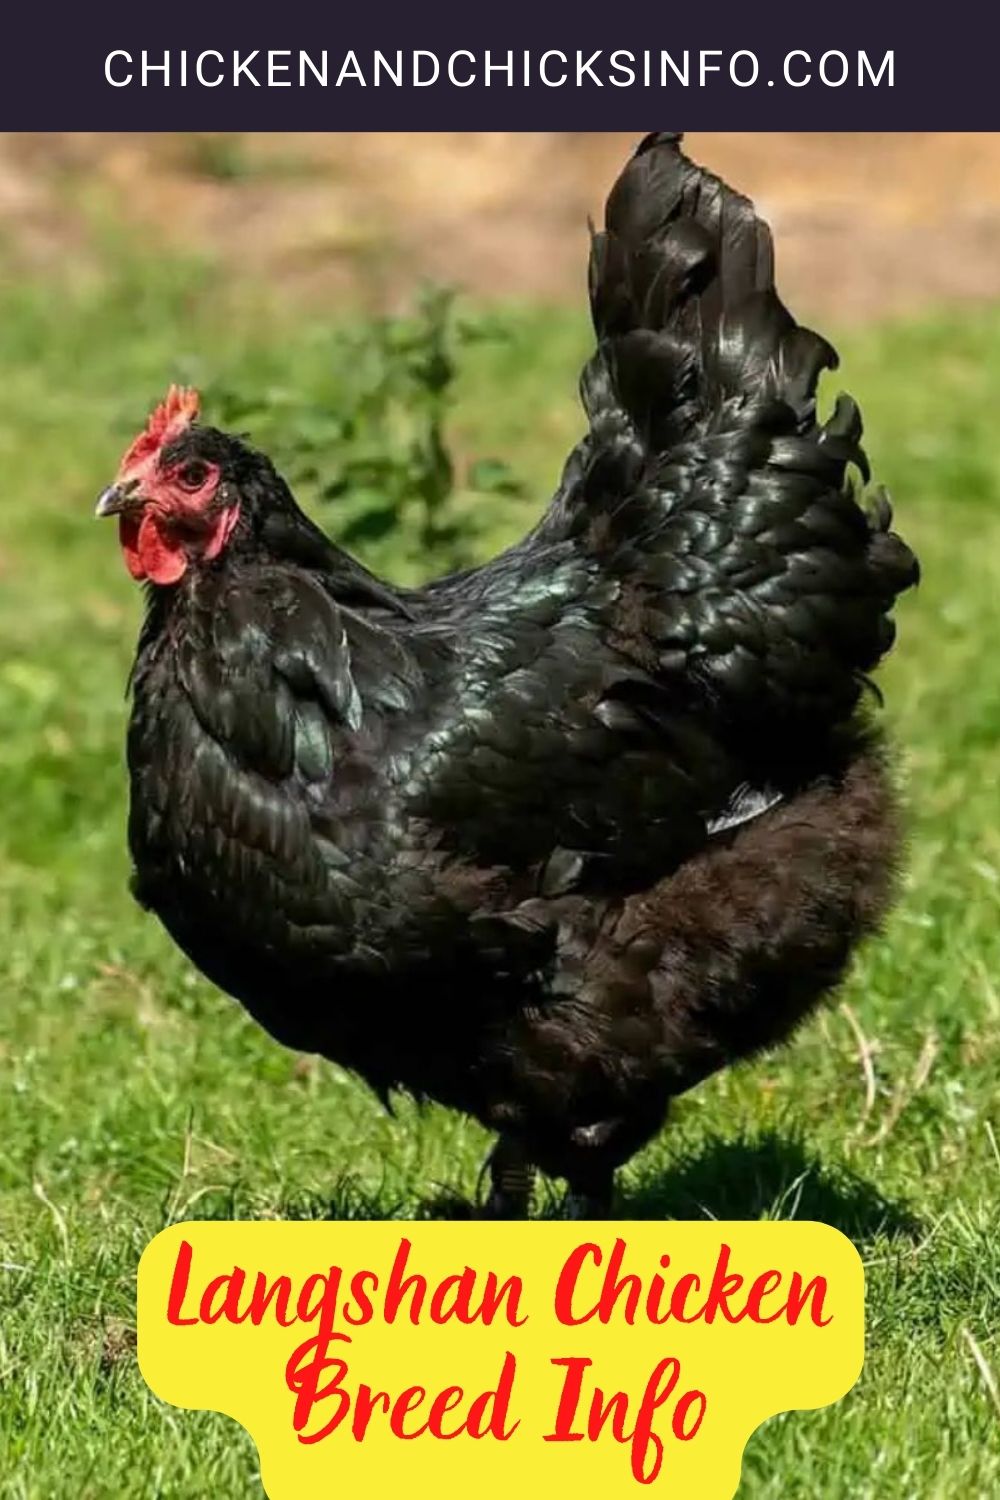 Langshan Chicken Breed Info pinterest image.